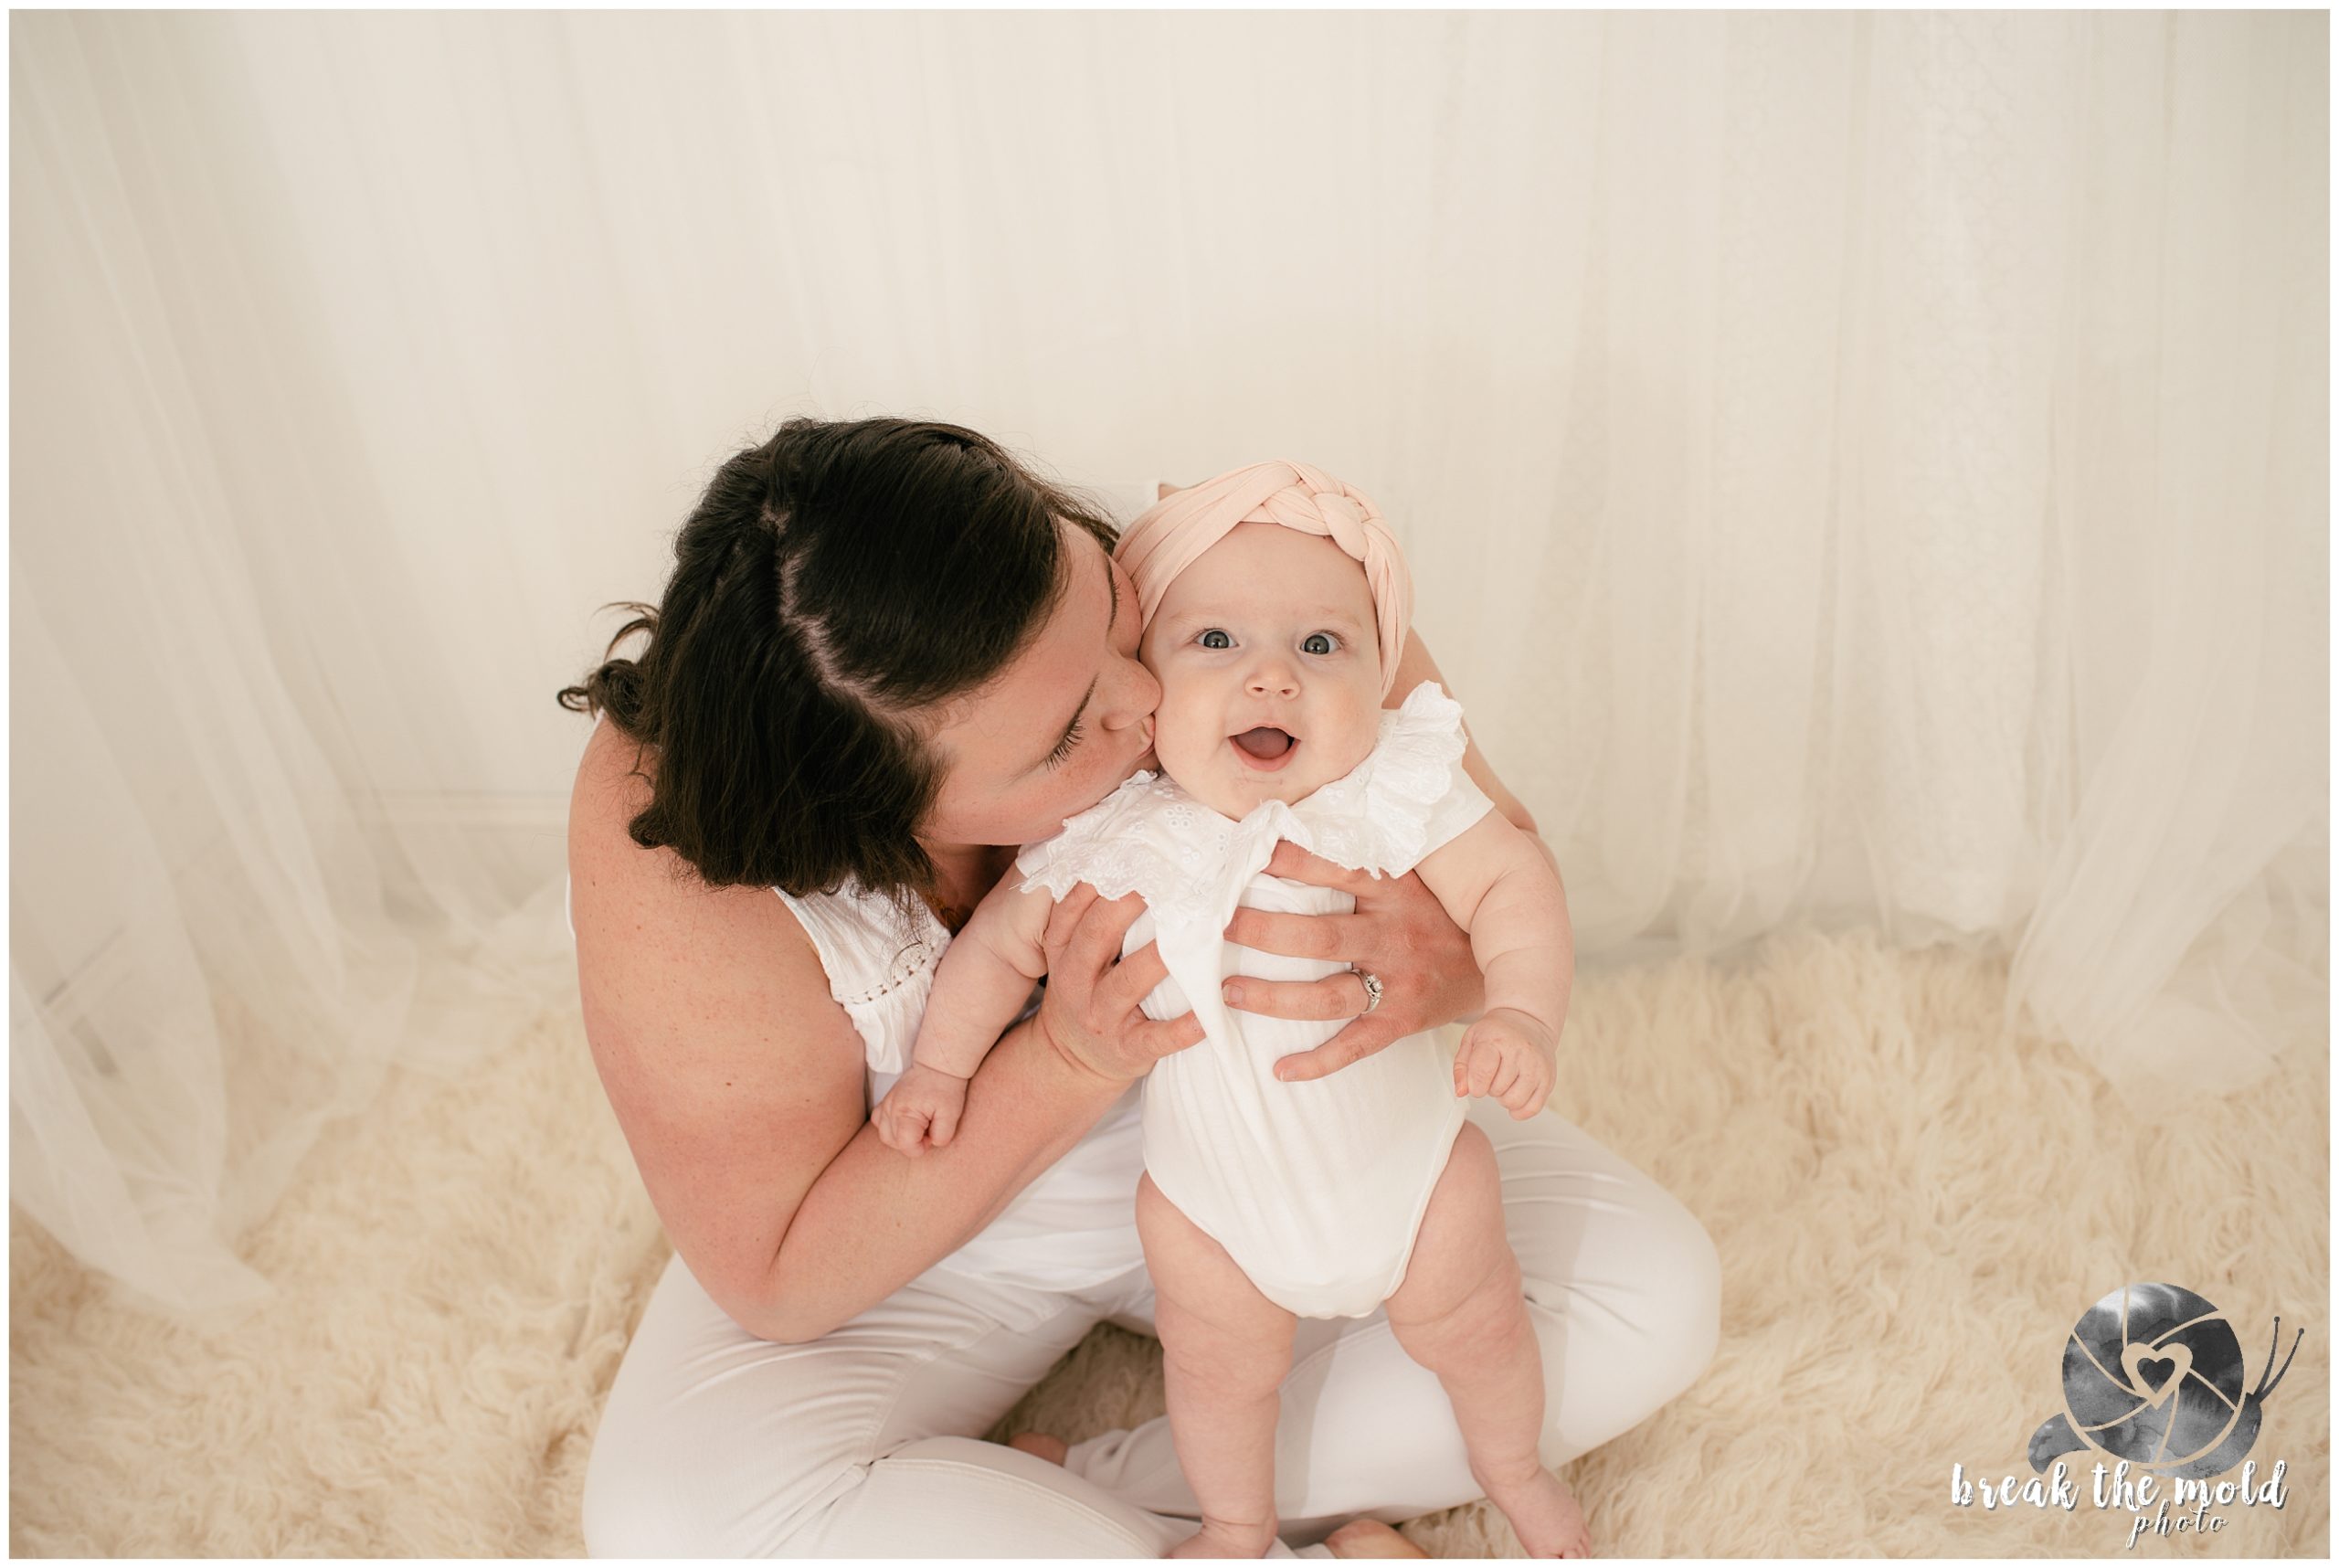 break-the-mold-photo-studio-knoxville-breastfeeding-photographer-mommy-baby-child-breastfed-portraits_0055.jpg